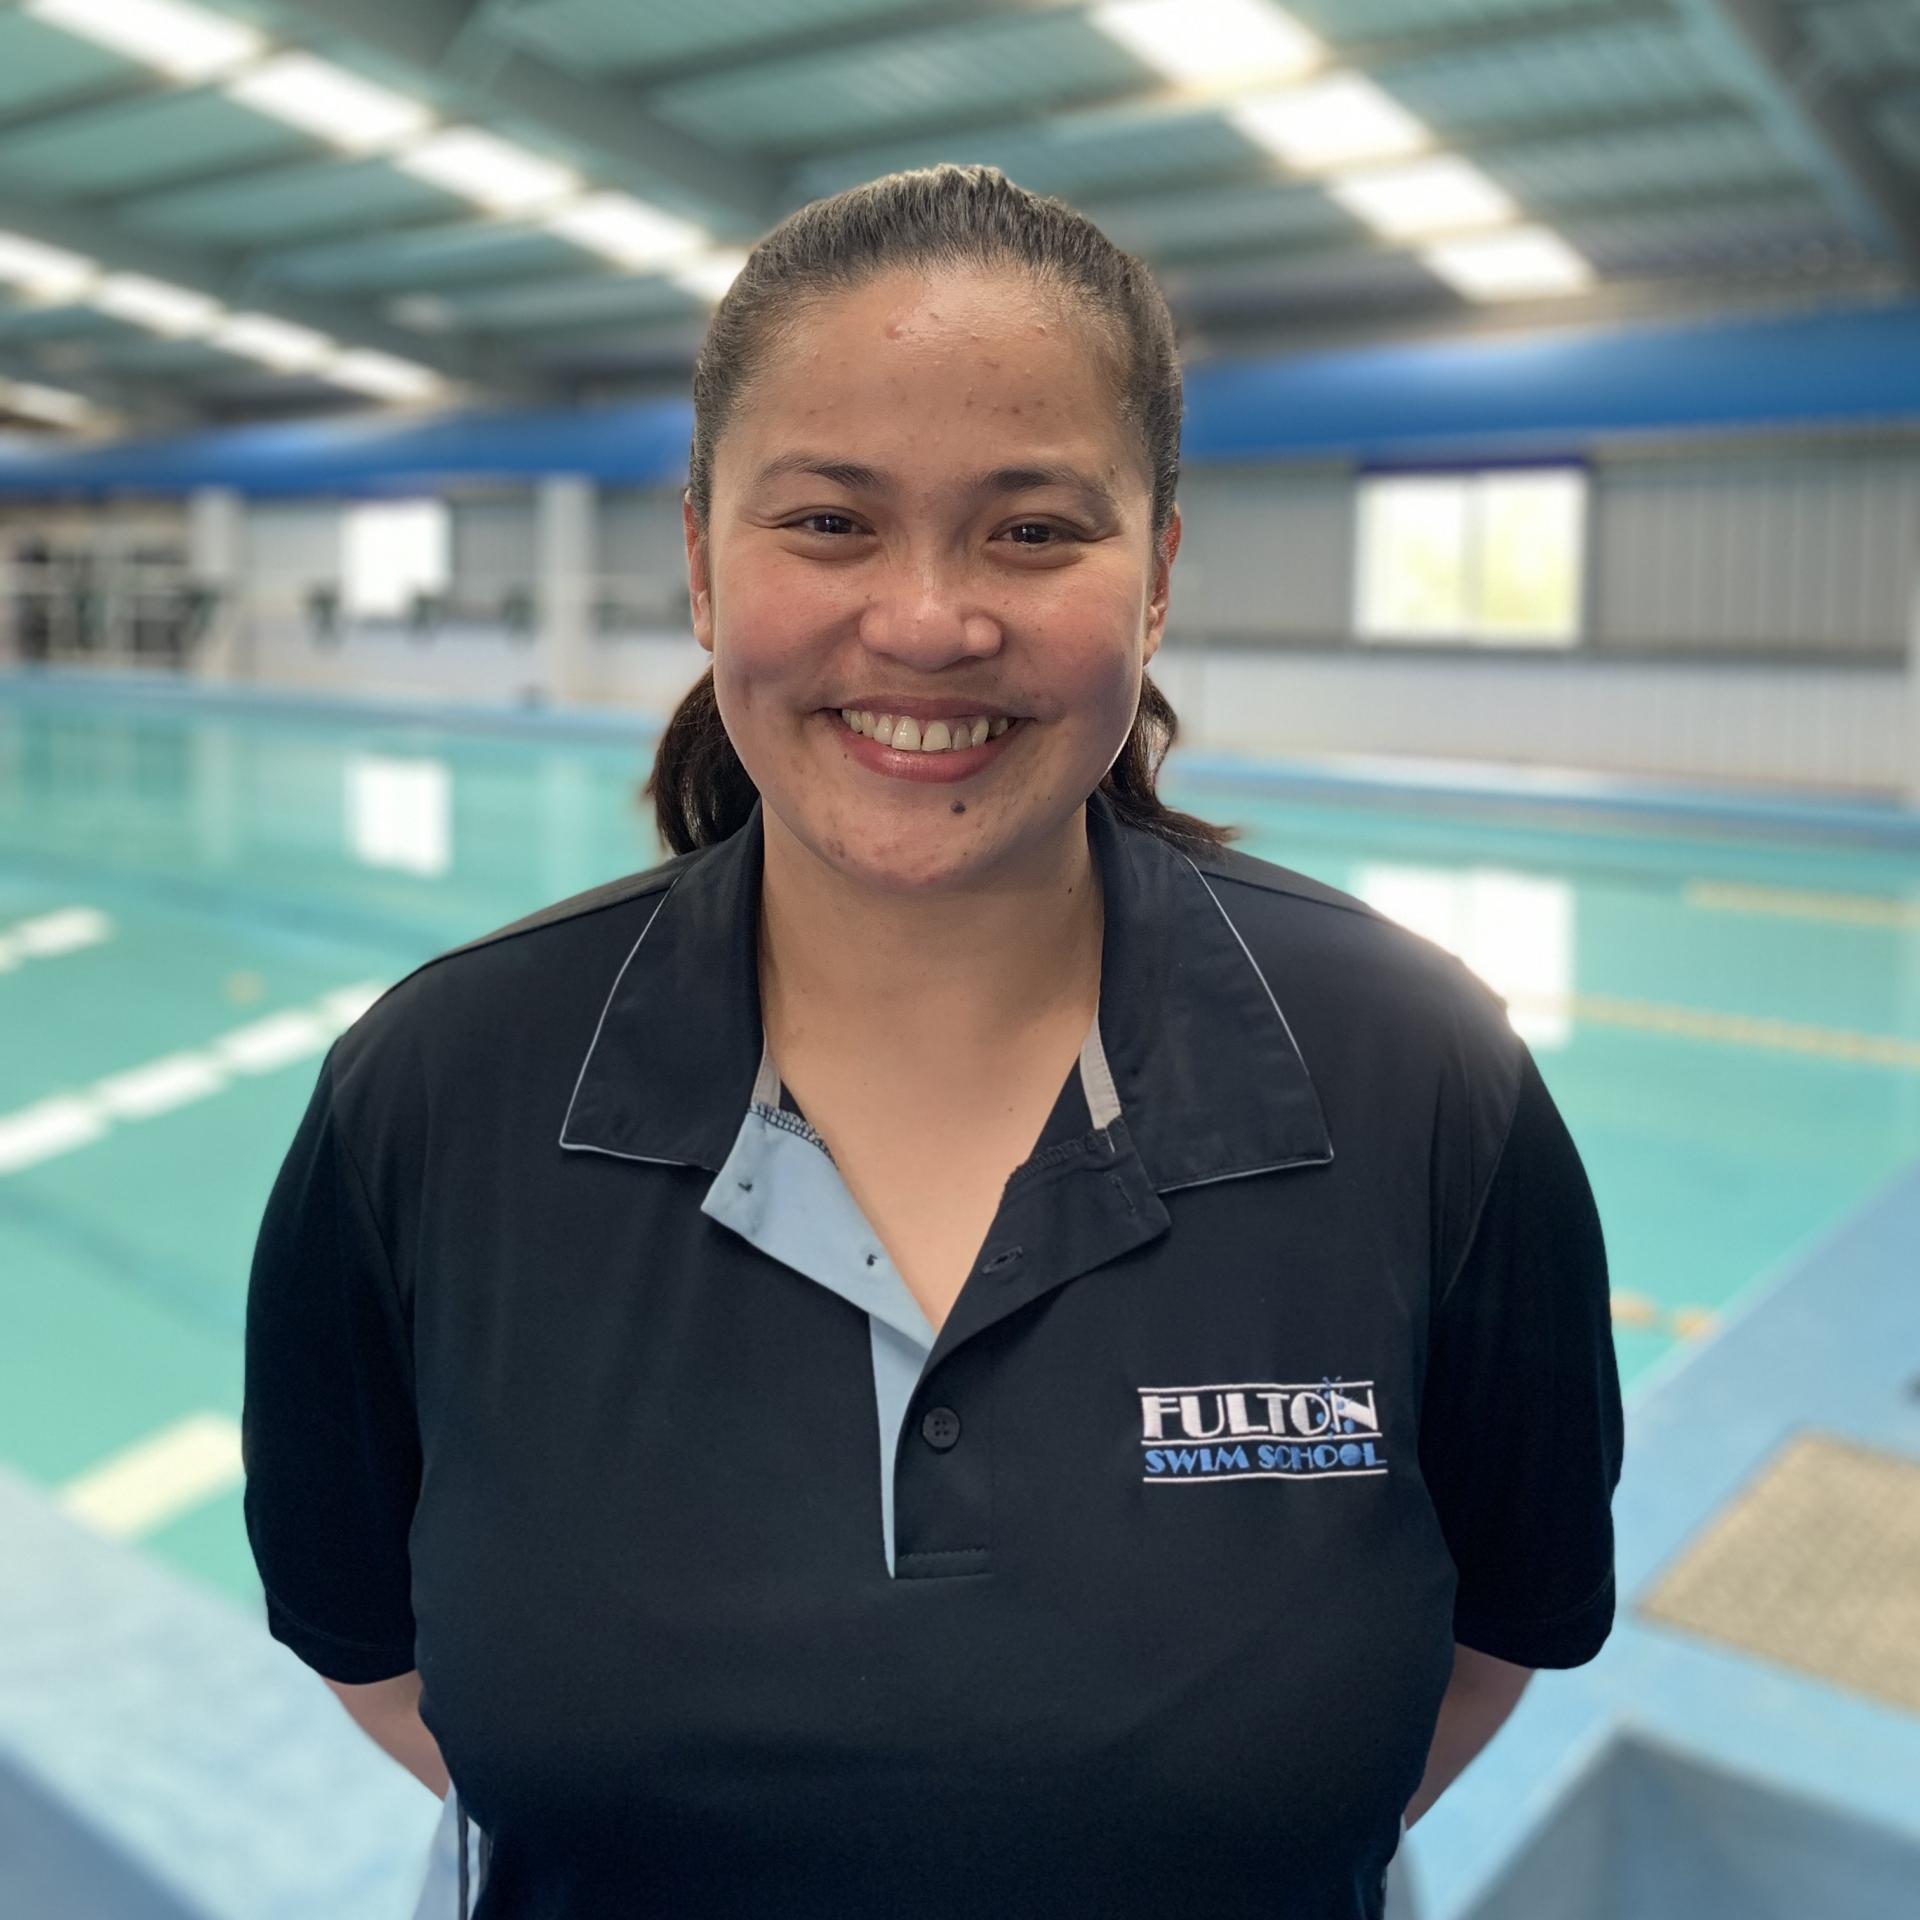 Botany Team Leader - Fultons Swim School